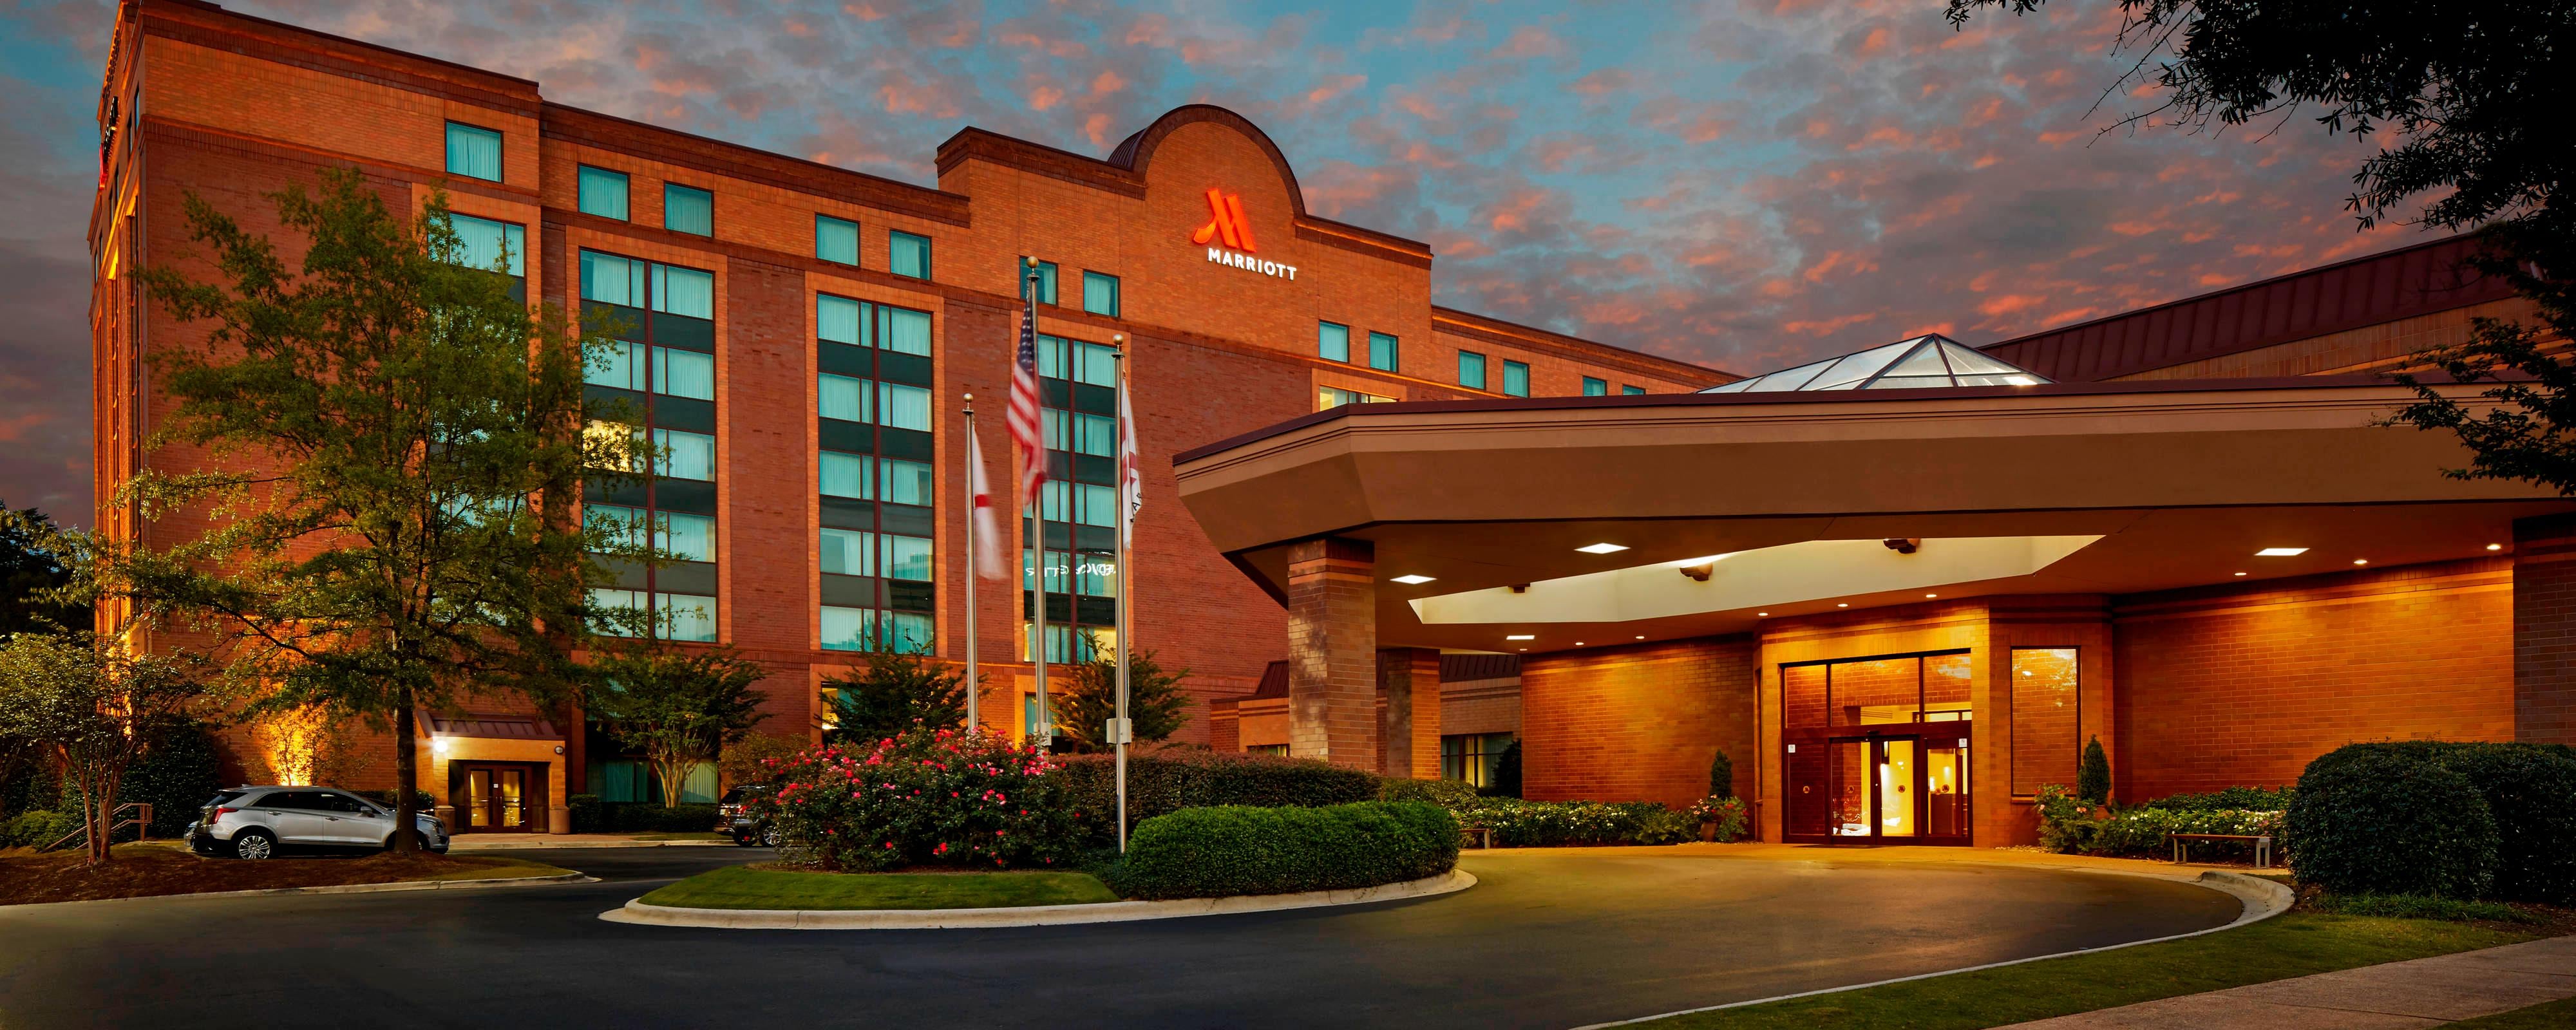 Birmingham Hotels – Hotels In Birmingham - Marriott in Birmingham, Alabama